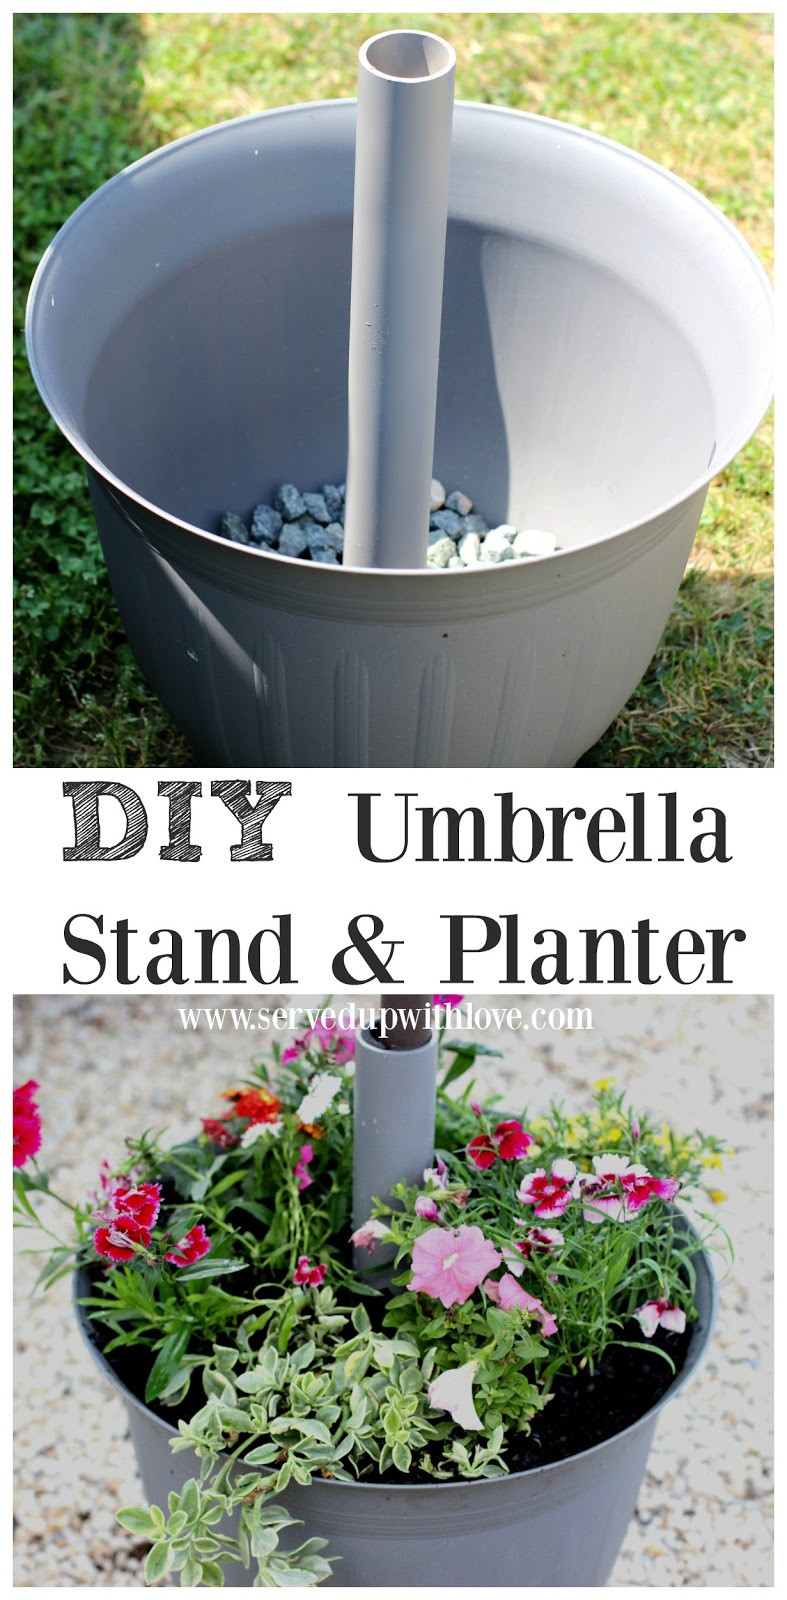 DIY Outdoor Umbrella Stand
 Served Up With Love DIY Umbrella Stand & Planter